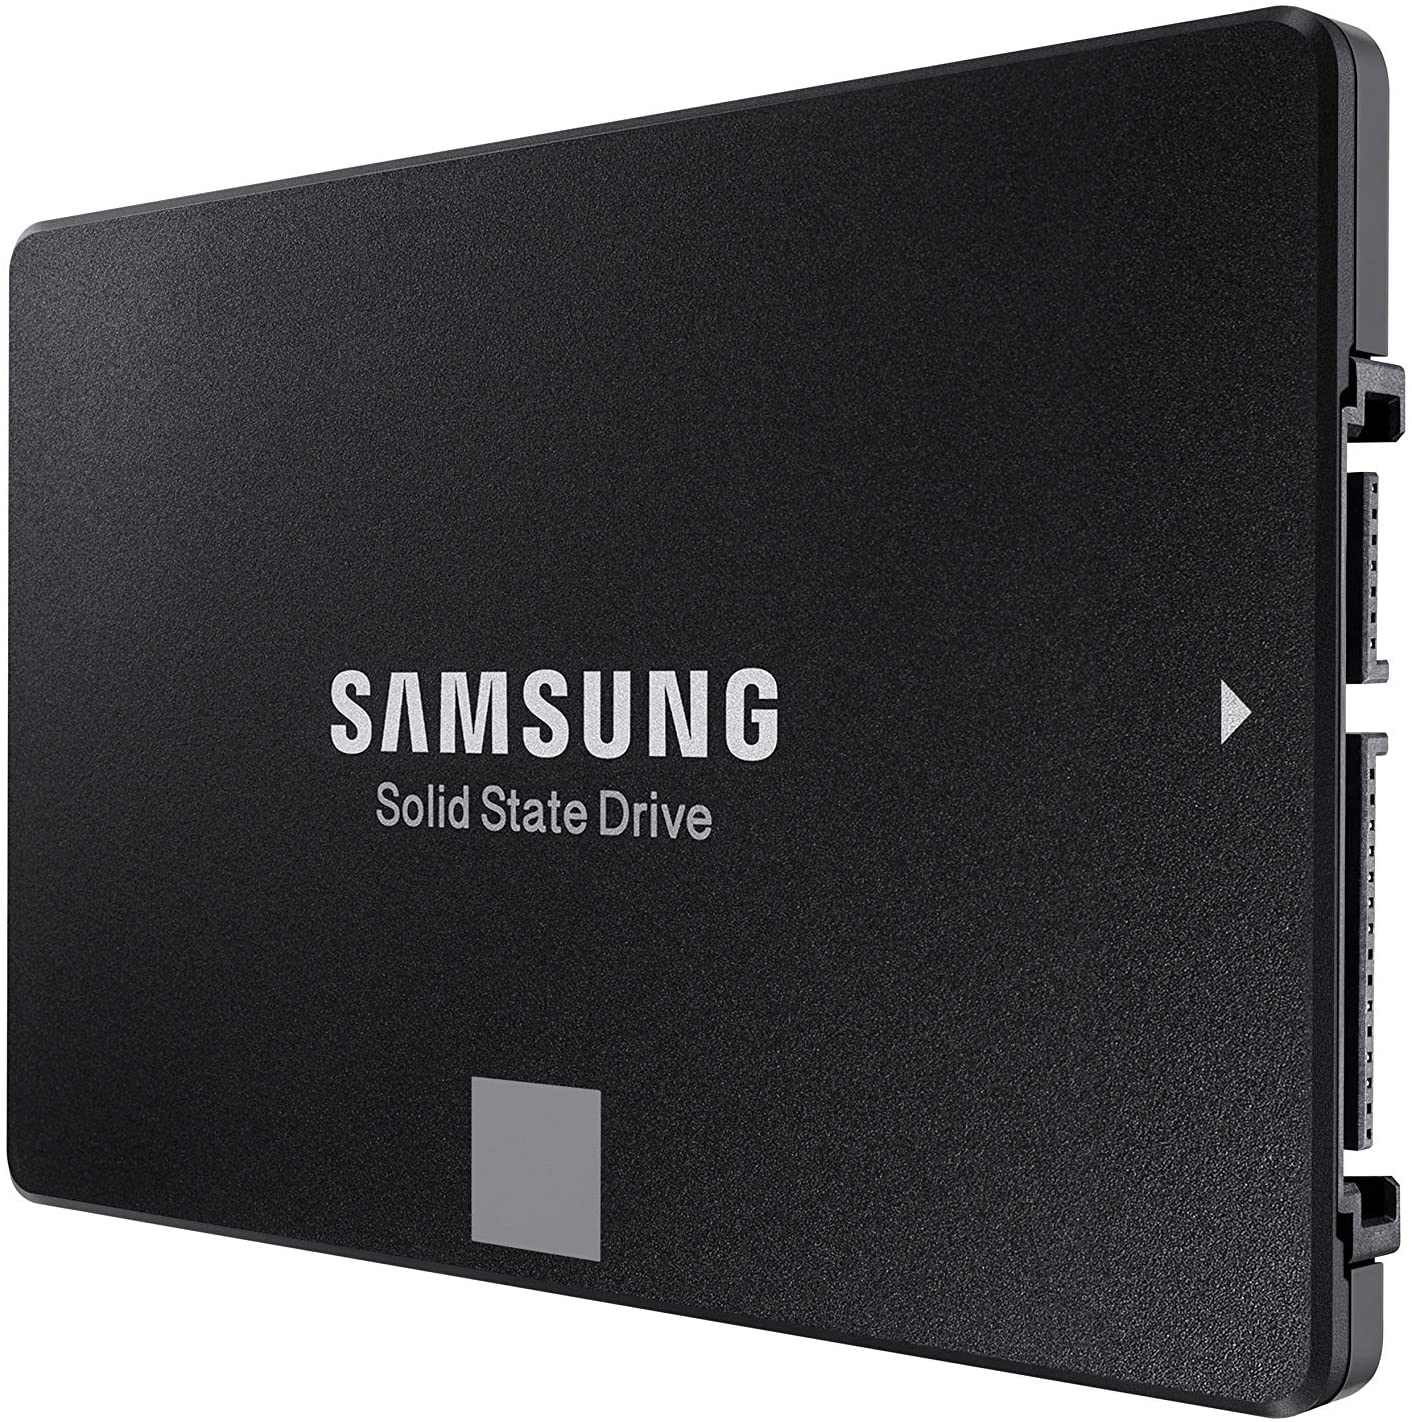 Samsung SSD 860 EVO 2TB 2.5 Inch SATA III Internal SSD (MZ-76E2T0B/AM) $209.99